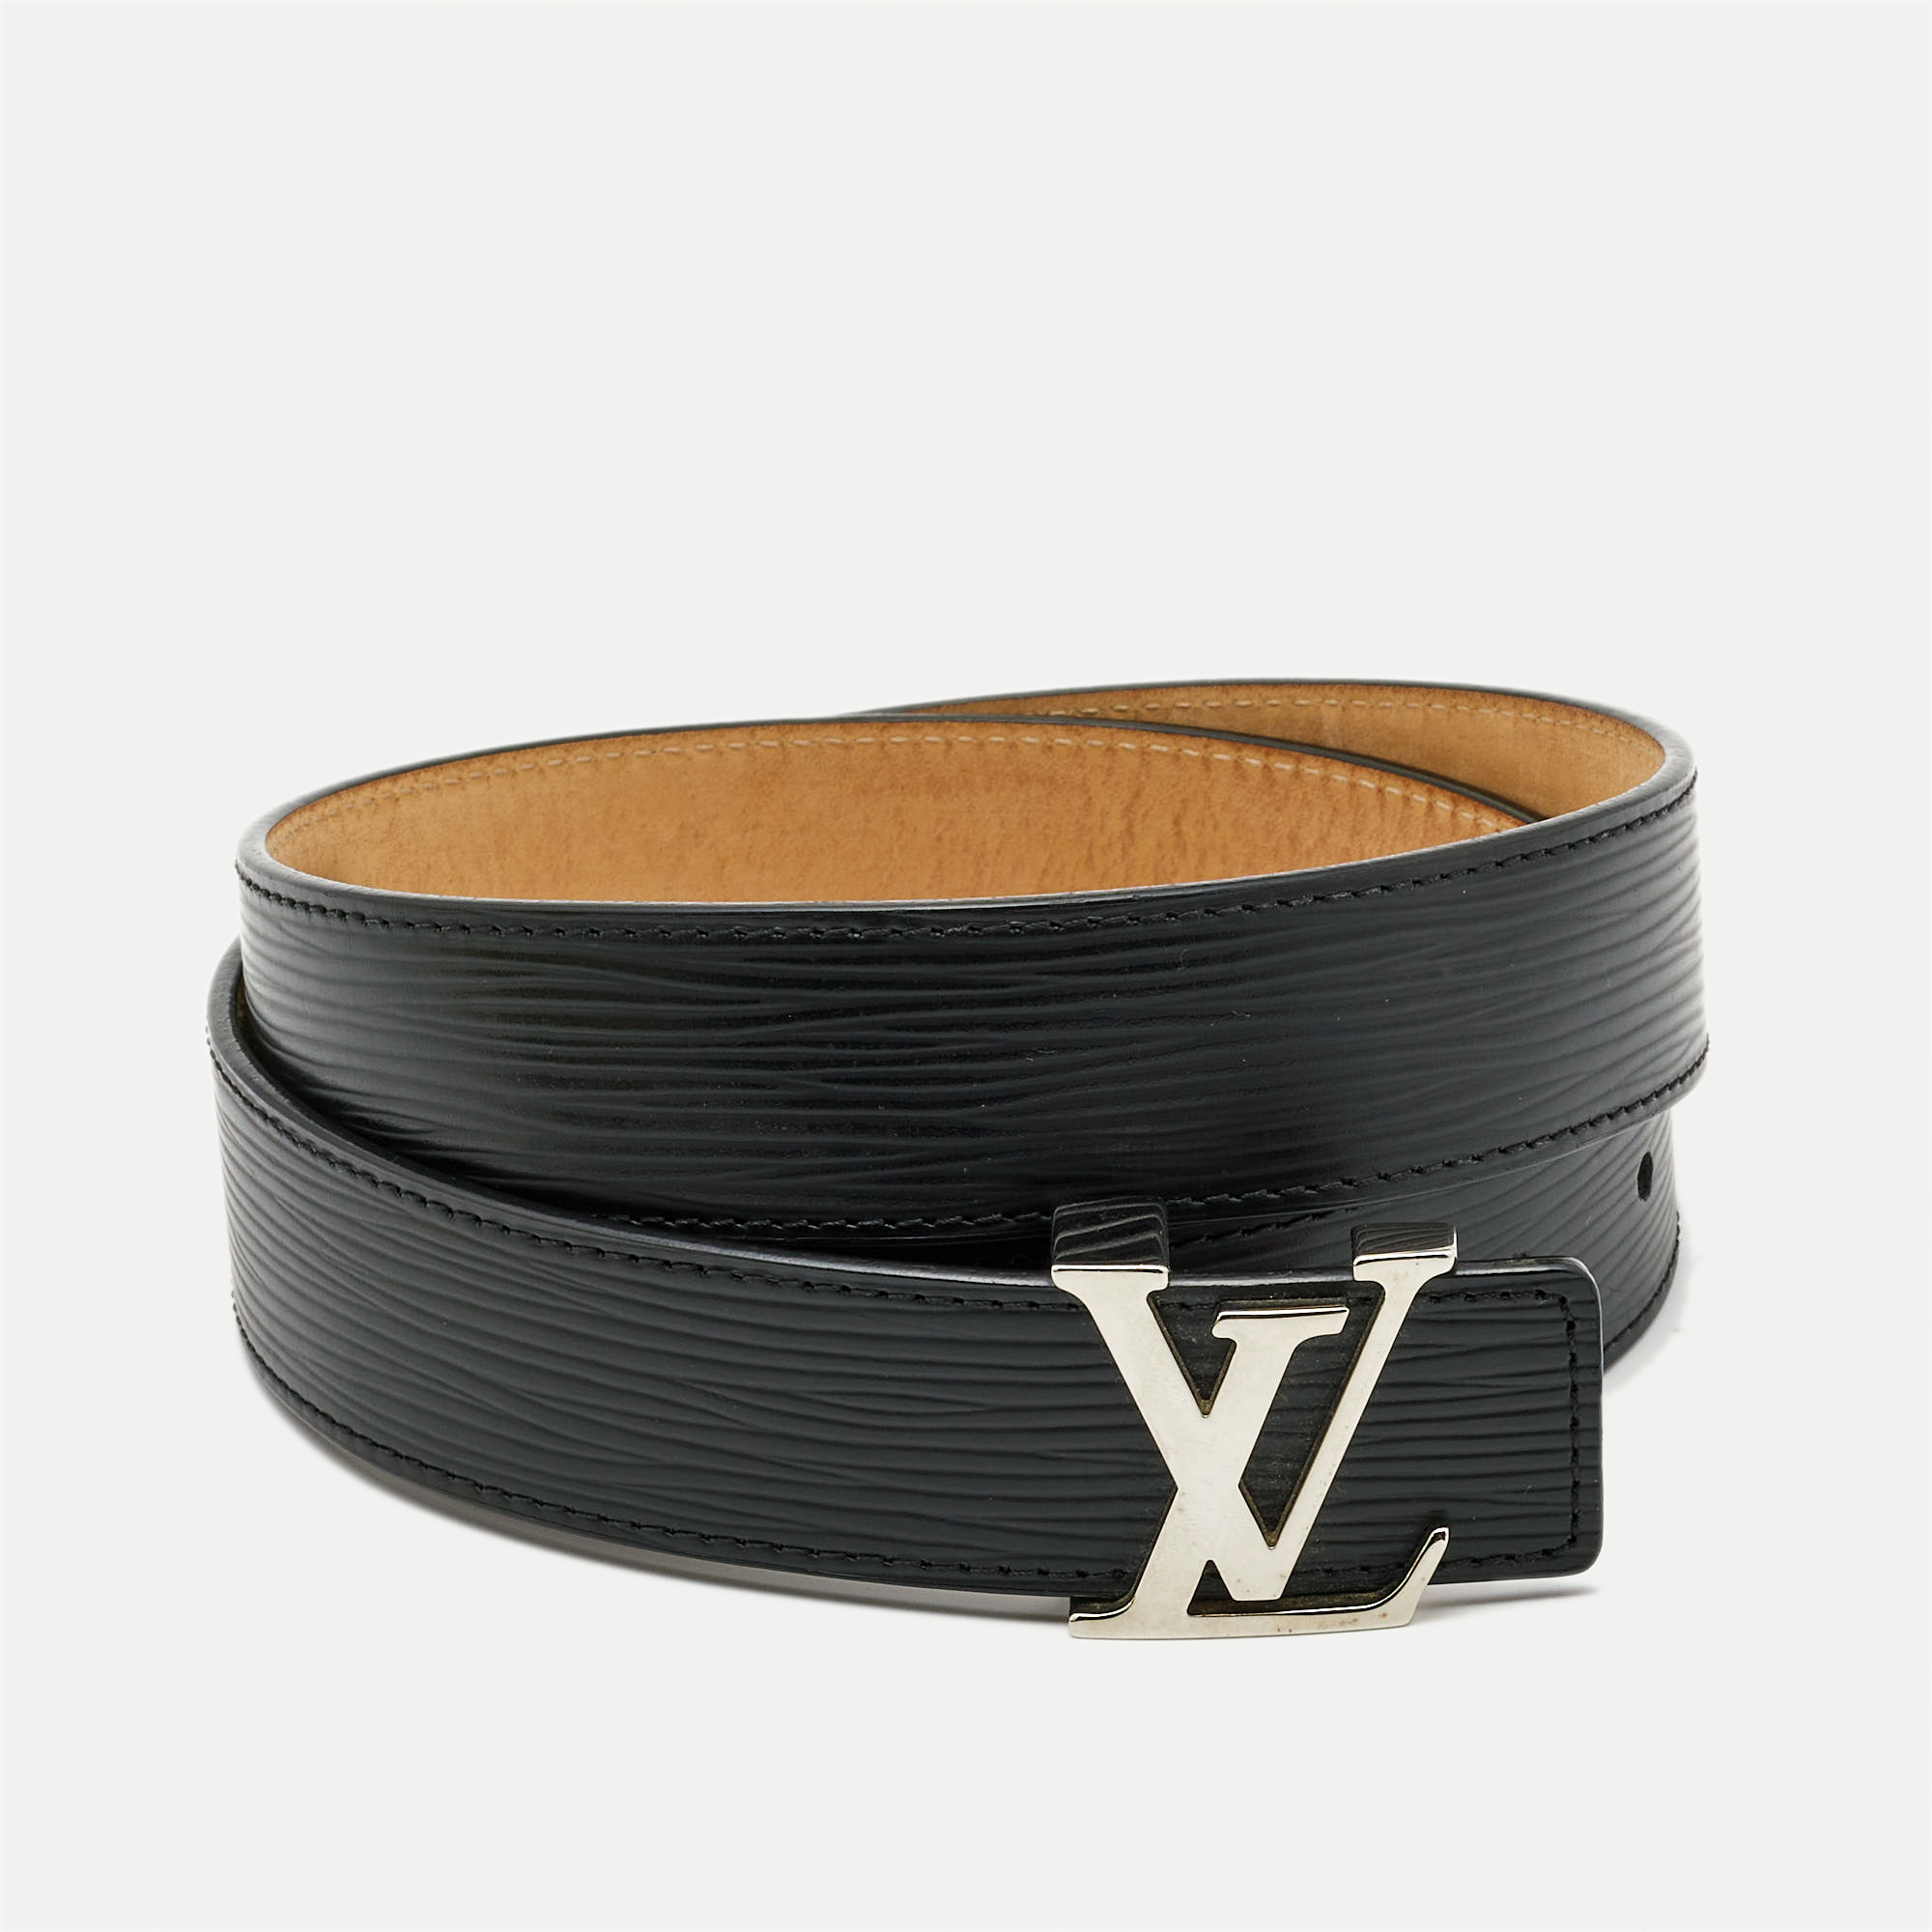 Pre-Owned & Vintage LOUIS VUITTON Belts for Women